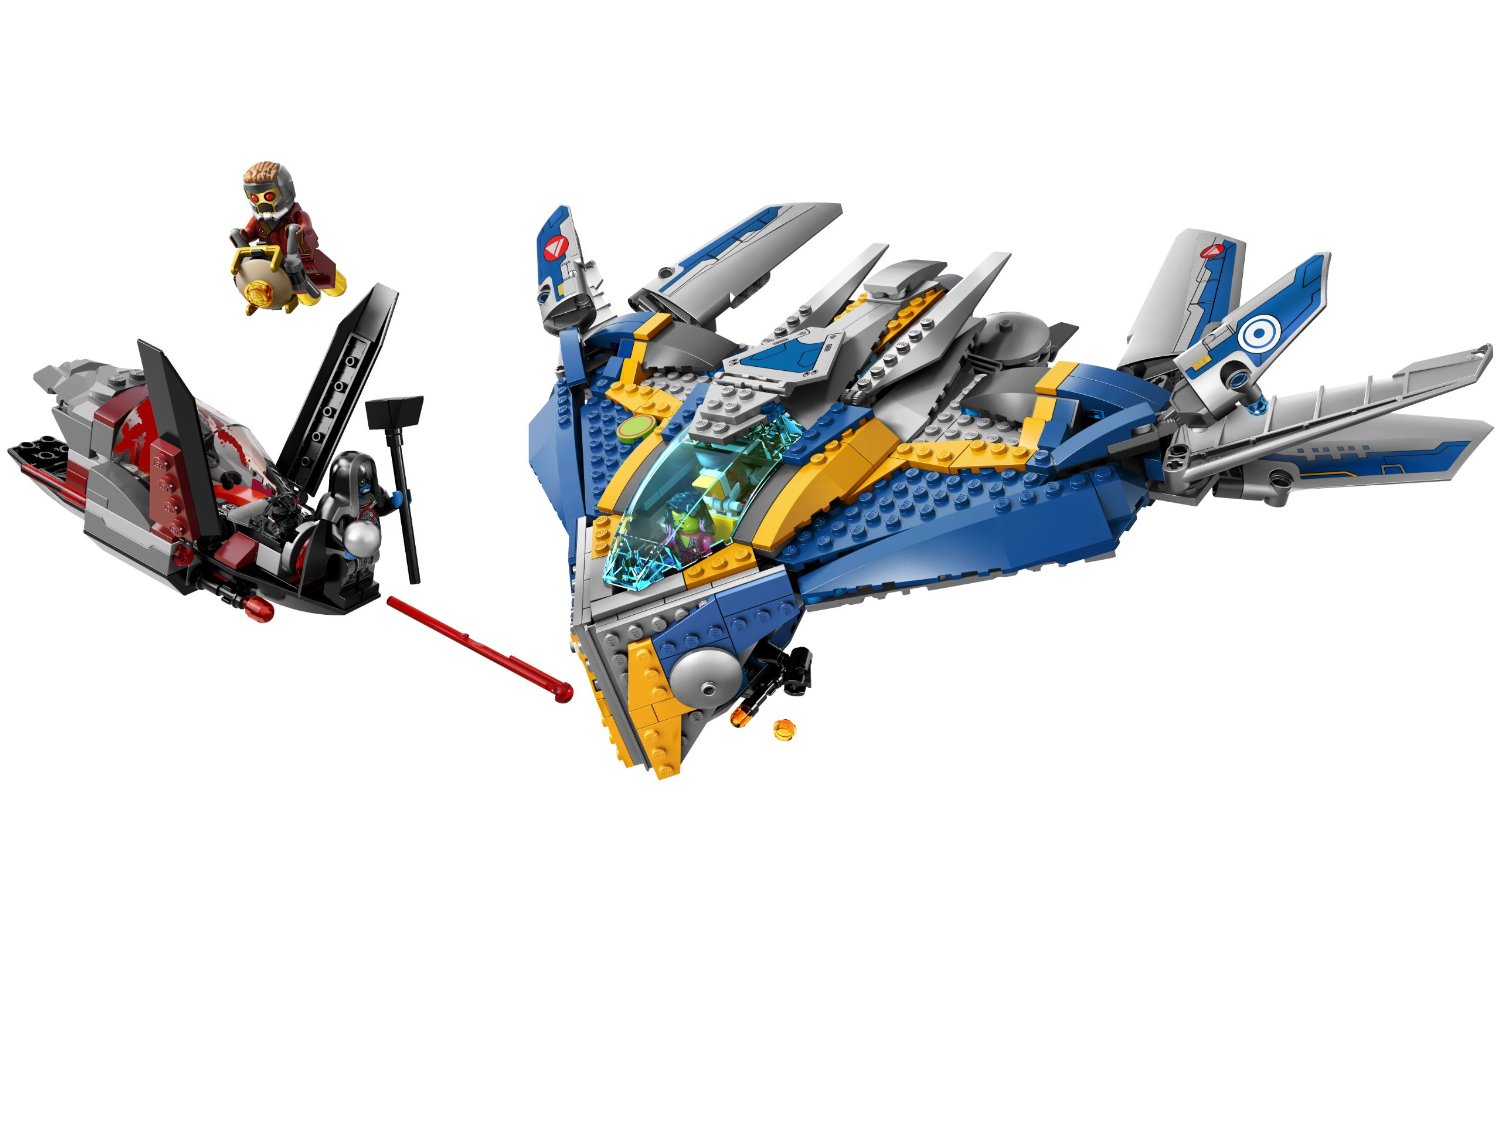 Statek Kosmiczny Milano Lego Super Heroes 76021